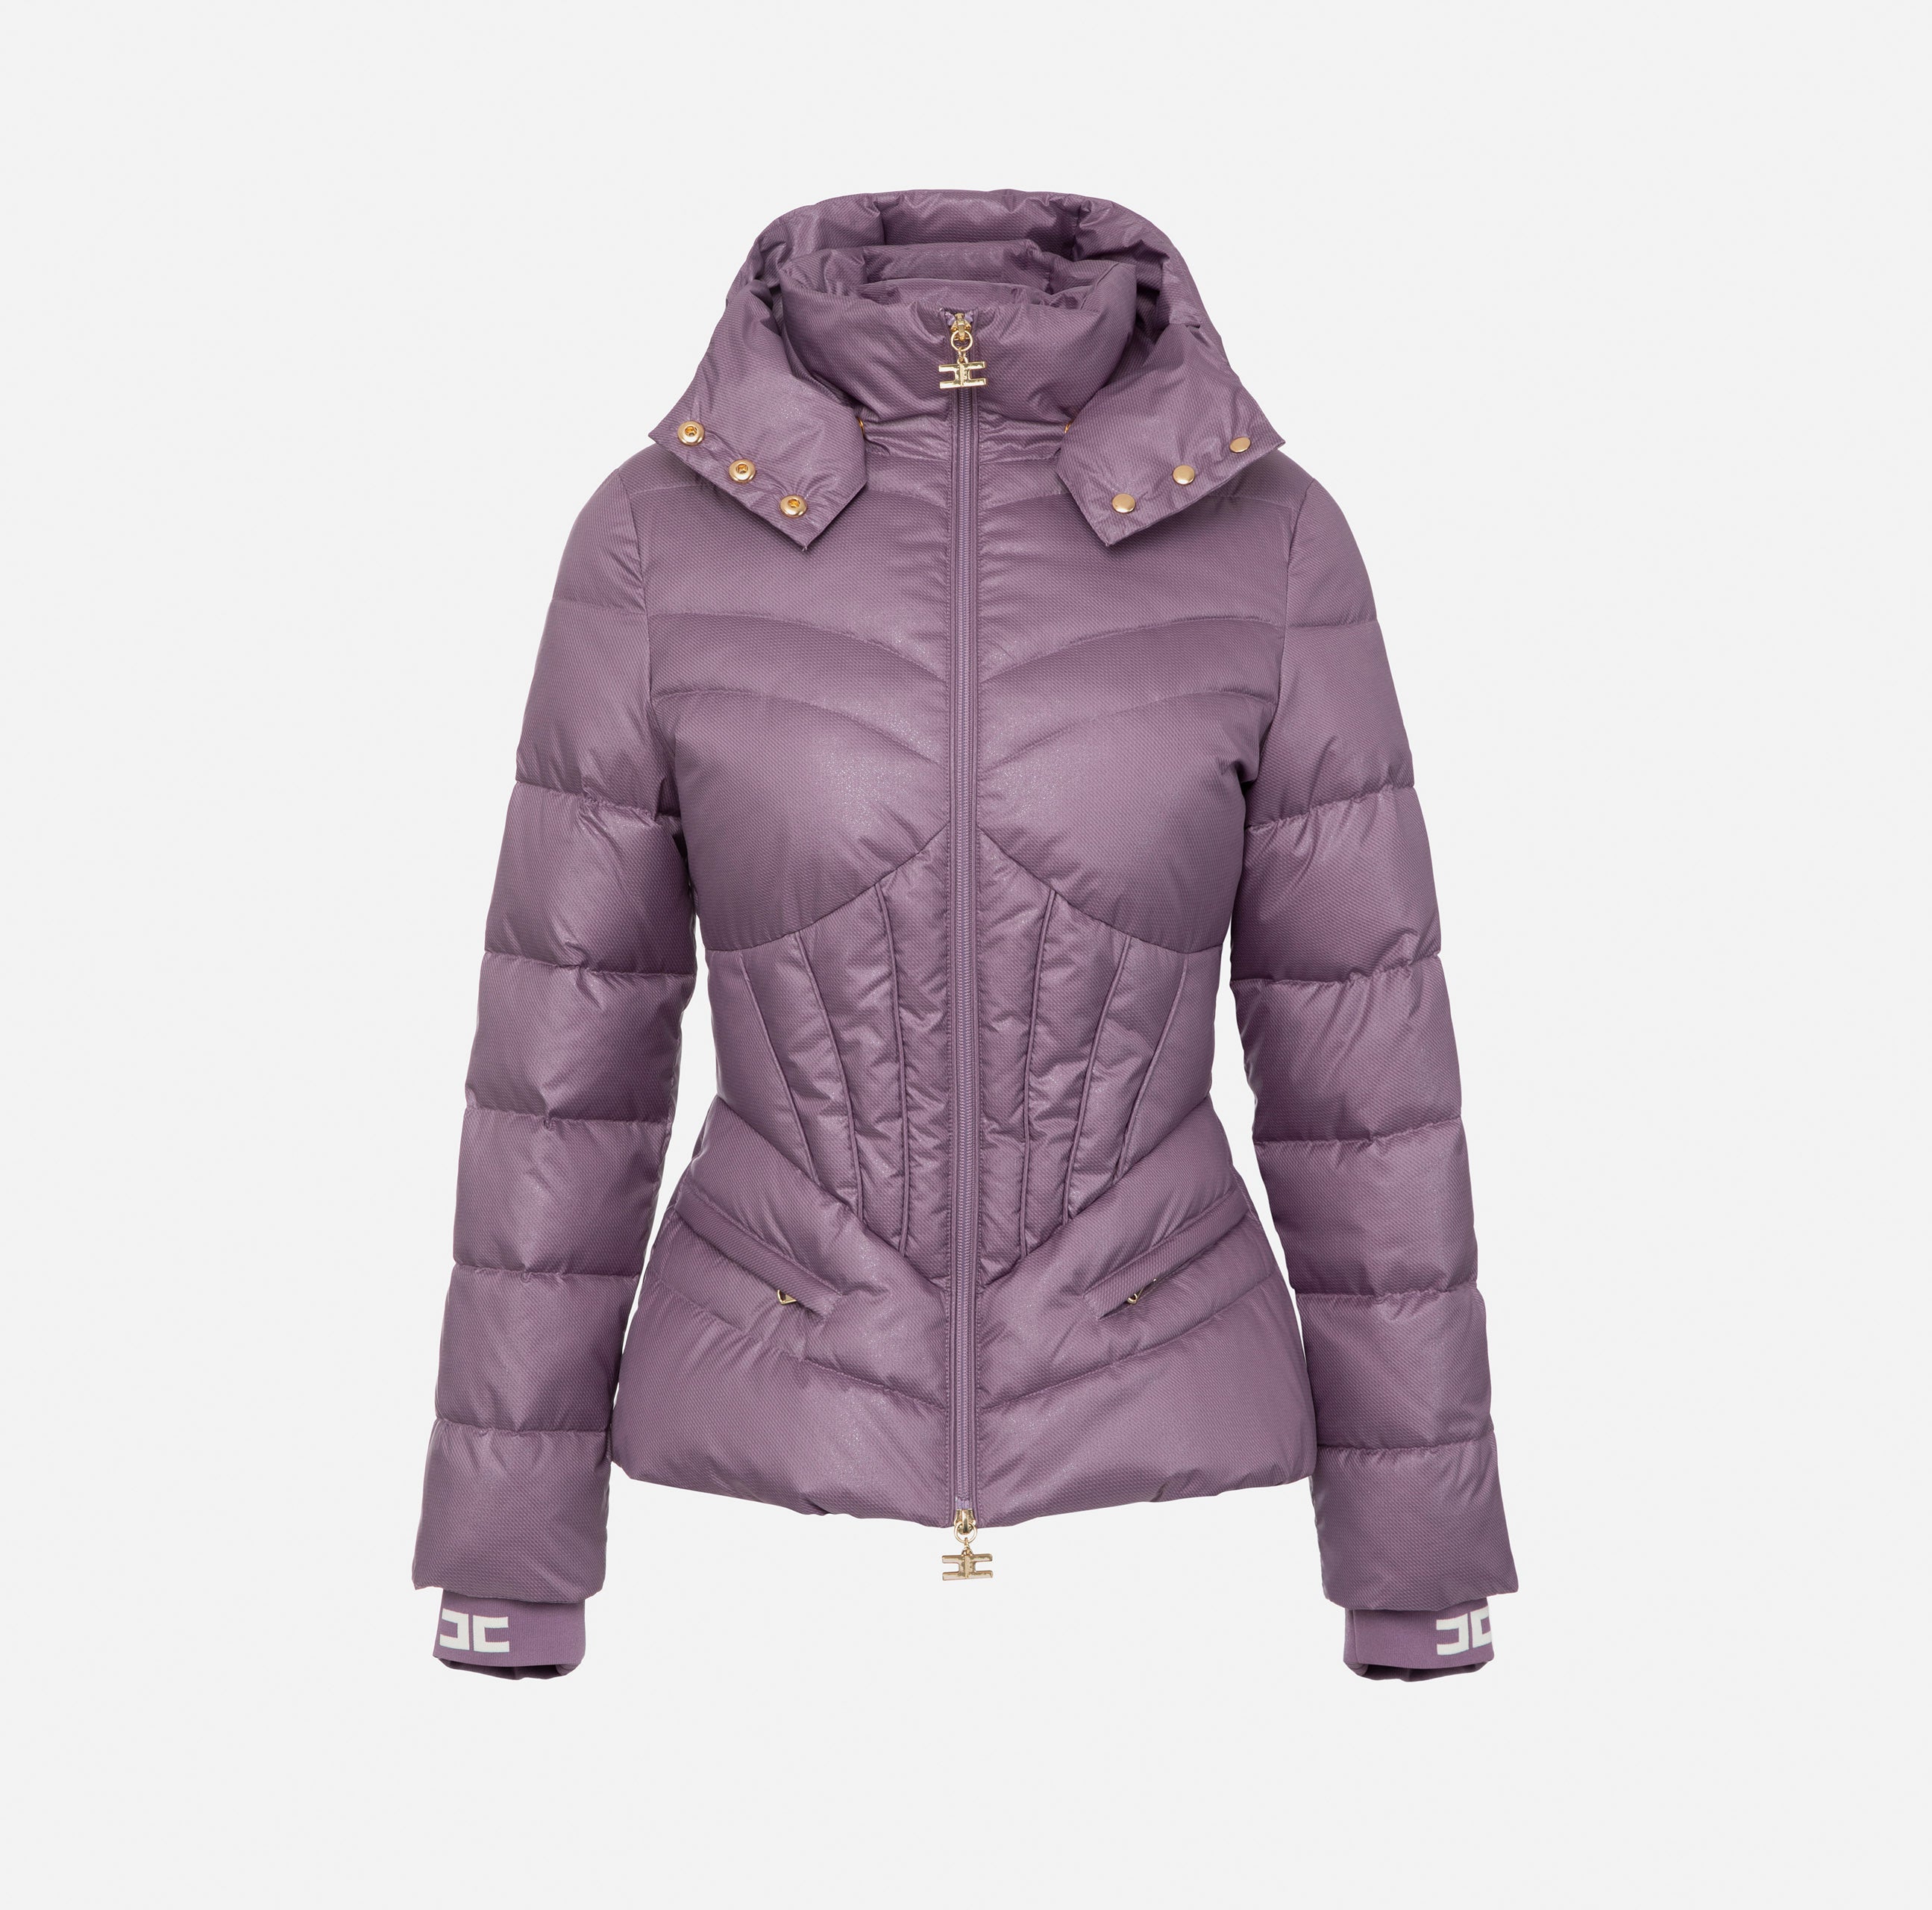 Elisabetta Franchi Women's Jacket PI59H36E2 Candy violet